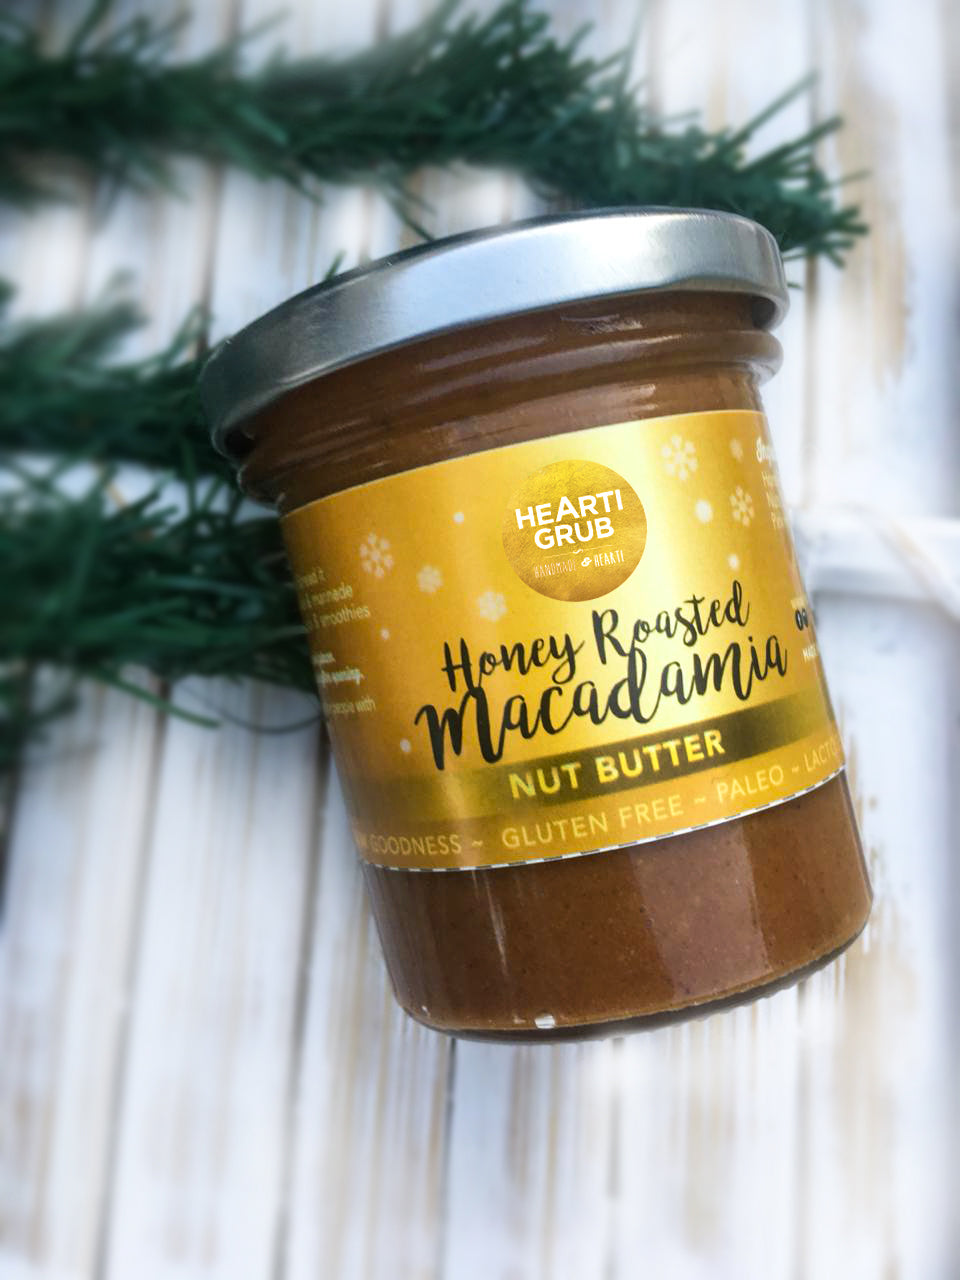 Honey Roasted Macadamia Nut Butter by Heartigrub, Dubai, UAE. Qty. Christmas Gift. Hamper. Corporate Gift. UAE